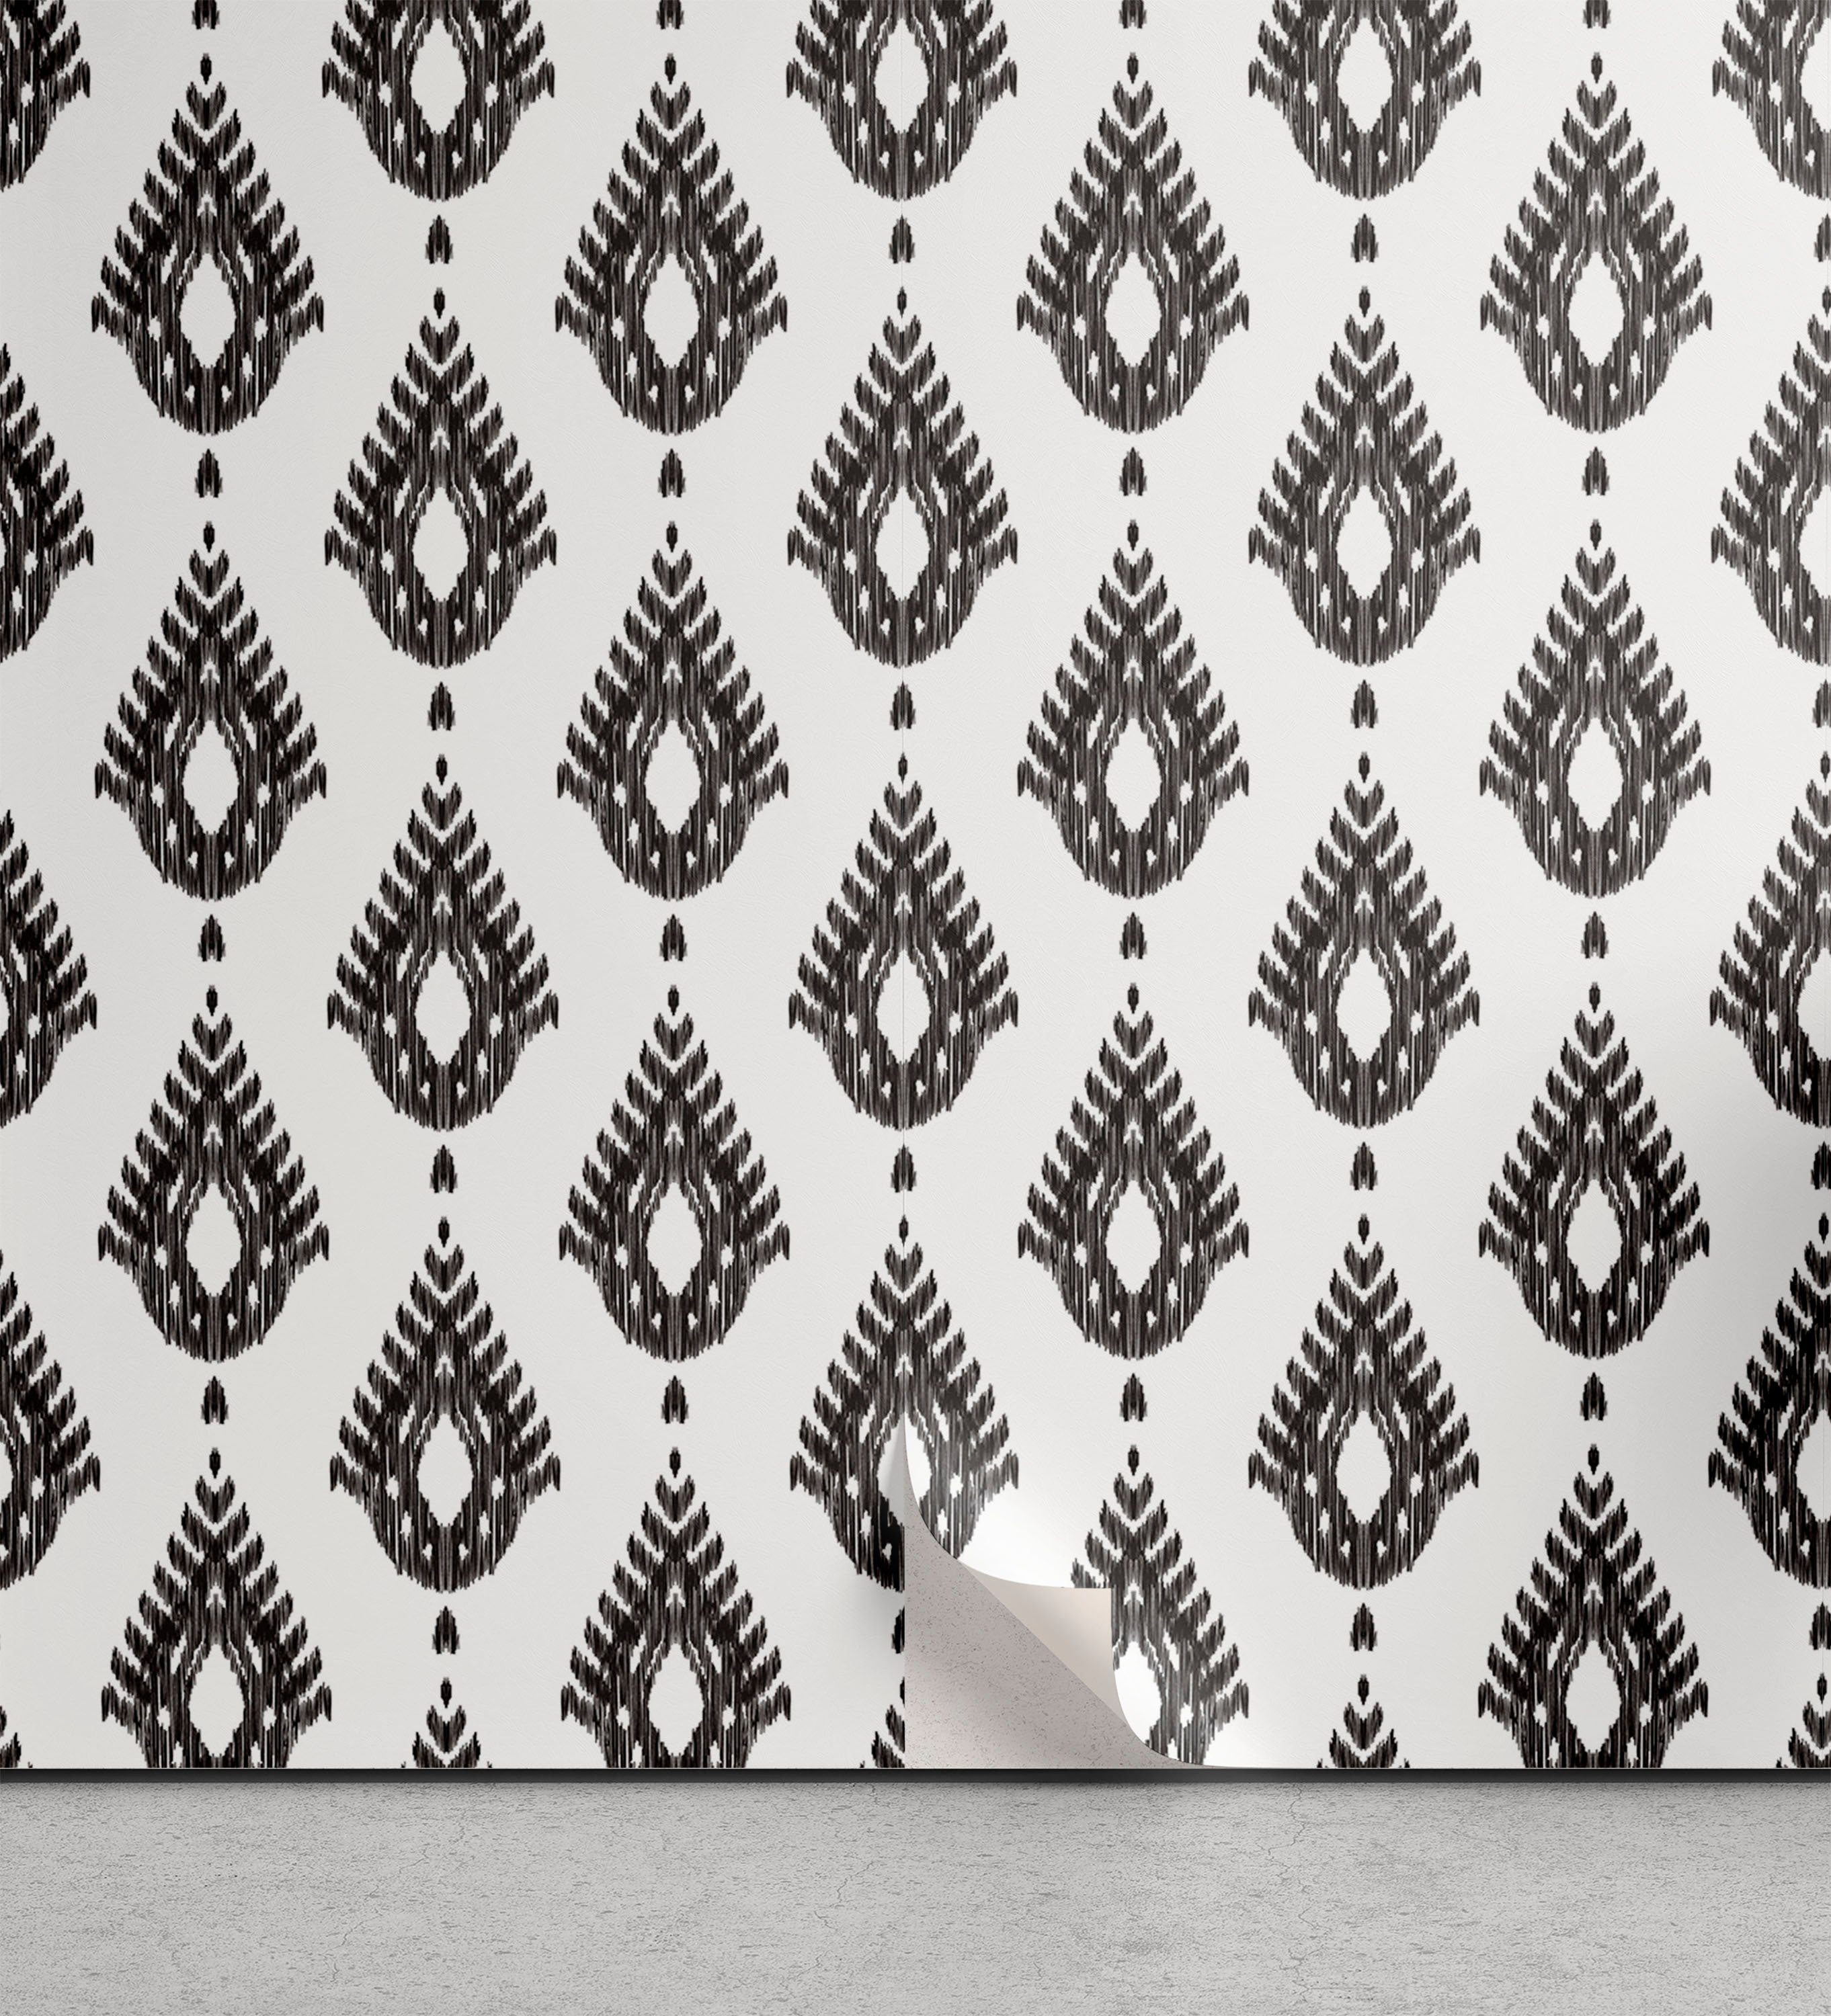 Abakuhaus Vinyltapete selbstklebendes Wohnzimmer Küchenakzent, Boho Drop-Motiv Einflüsse